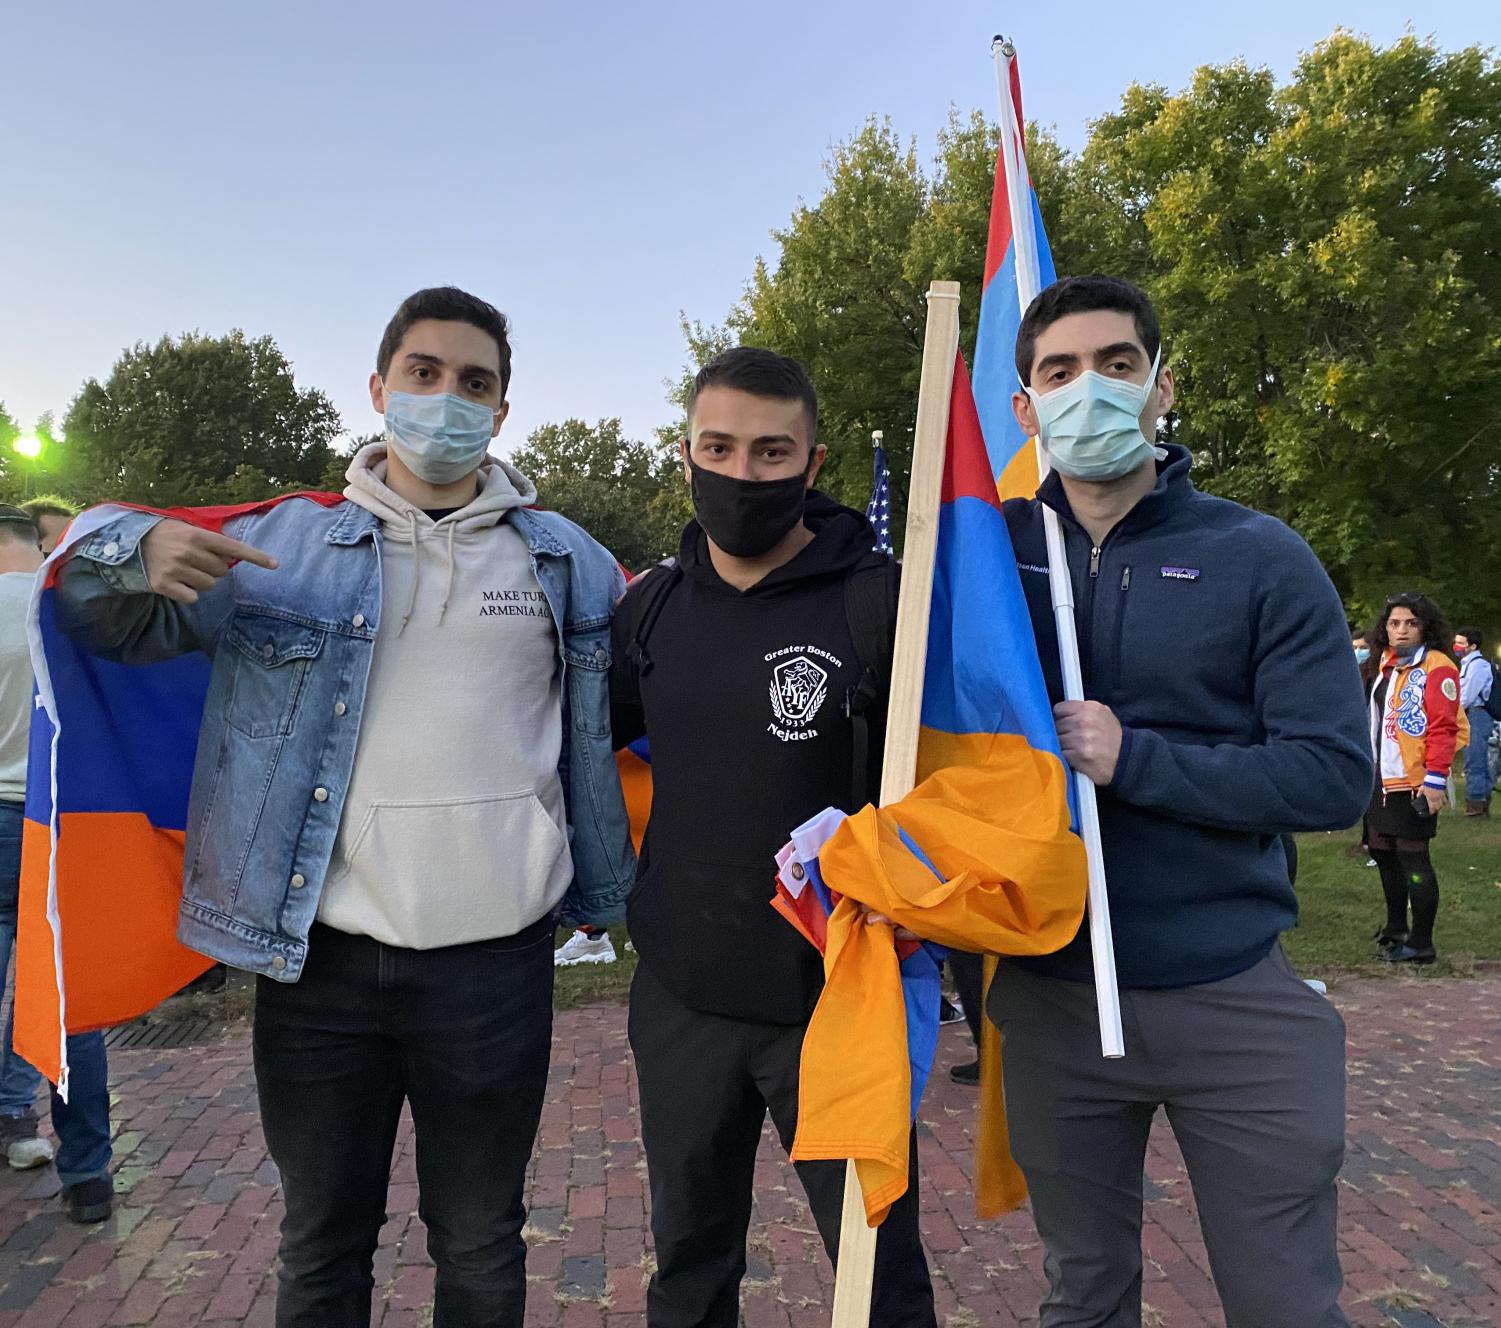 Armenian+community+protests+Azerbaijani+aggression+in+march+through+Common